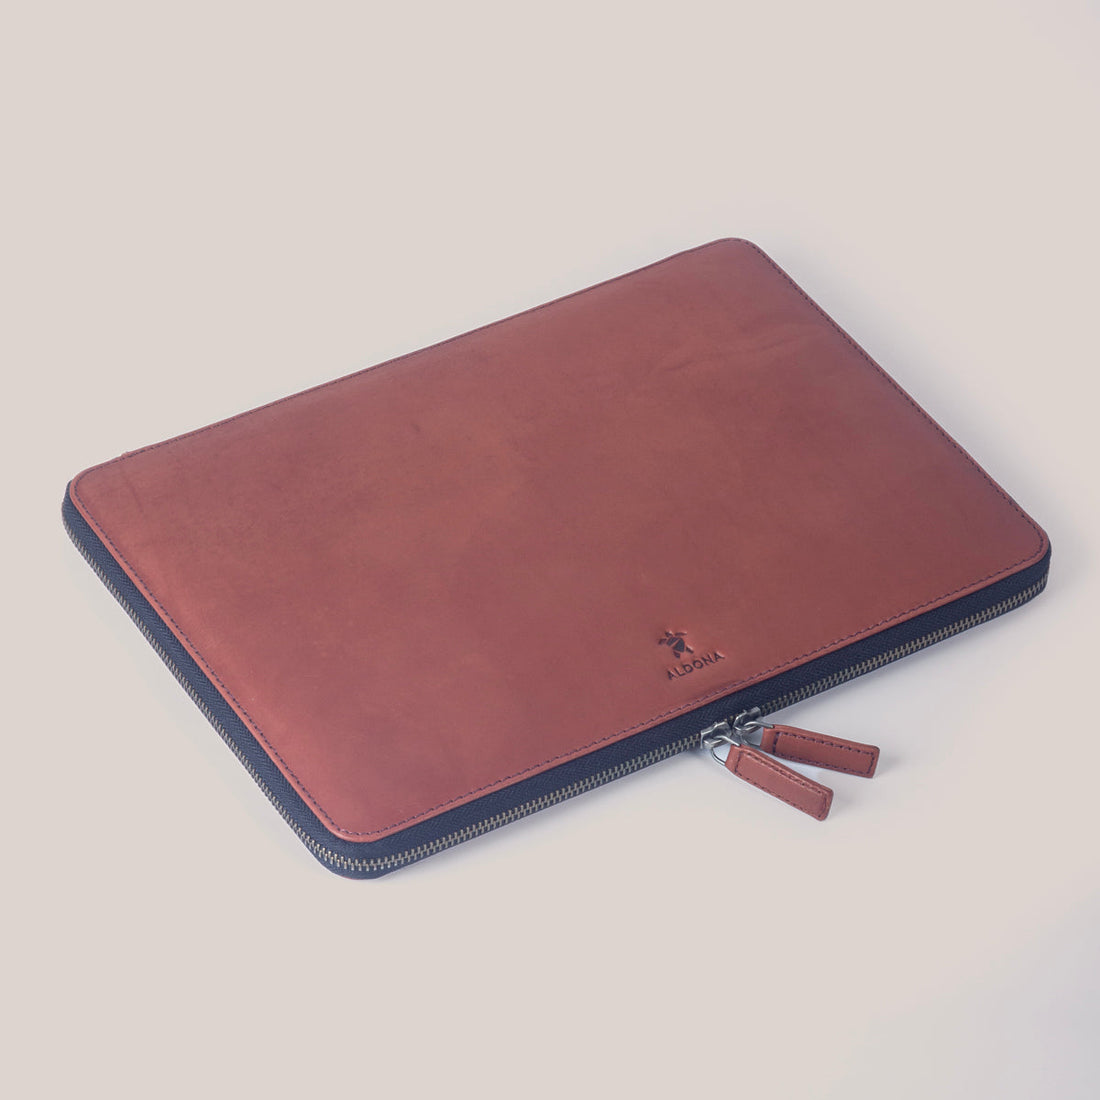 Microsoft Surface Laptop Studio Zippered Laptop Case - Vintage Tan